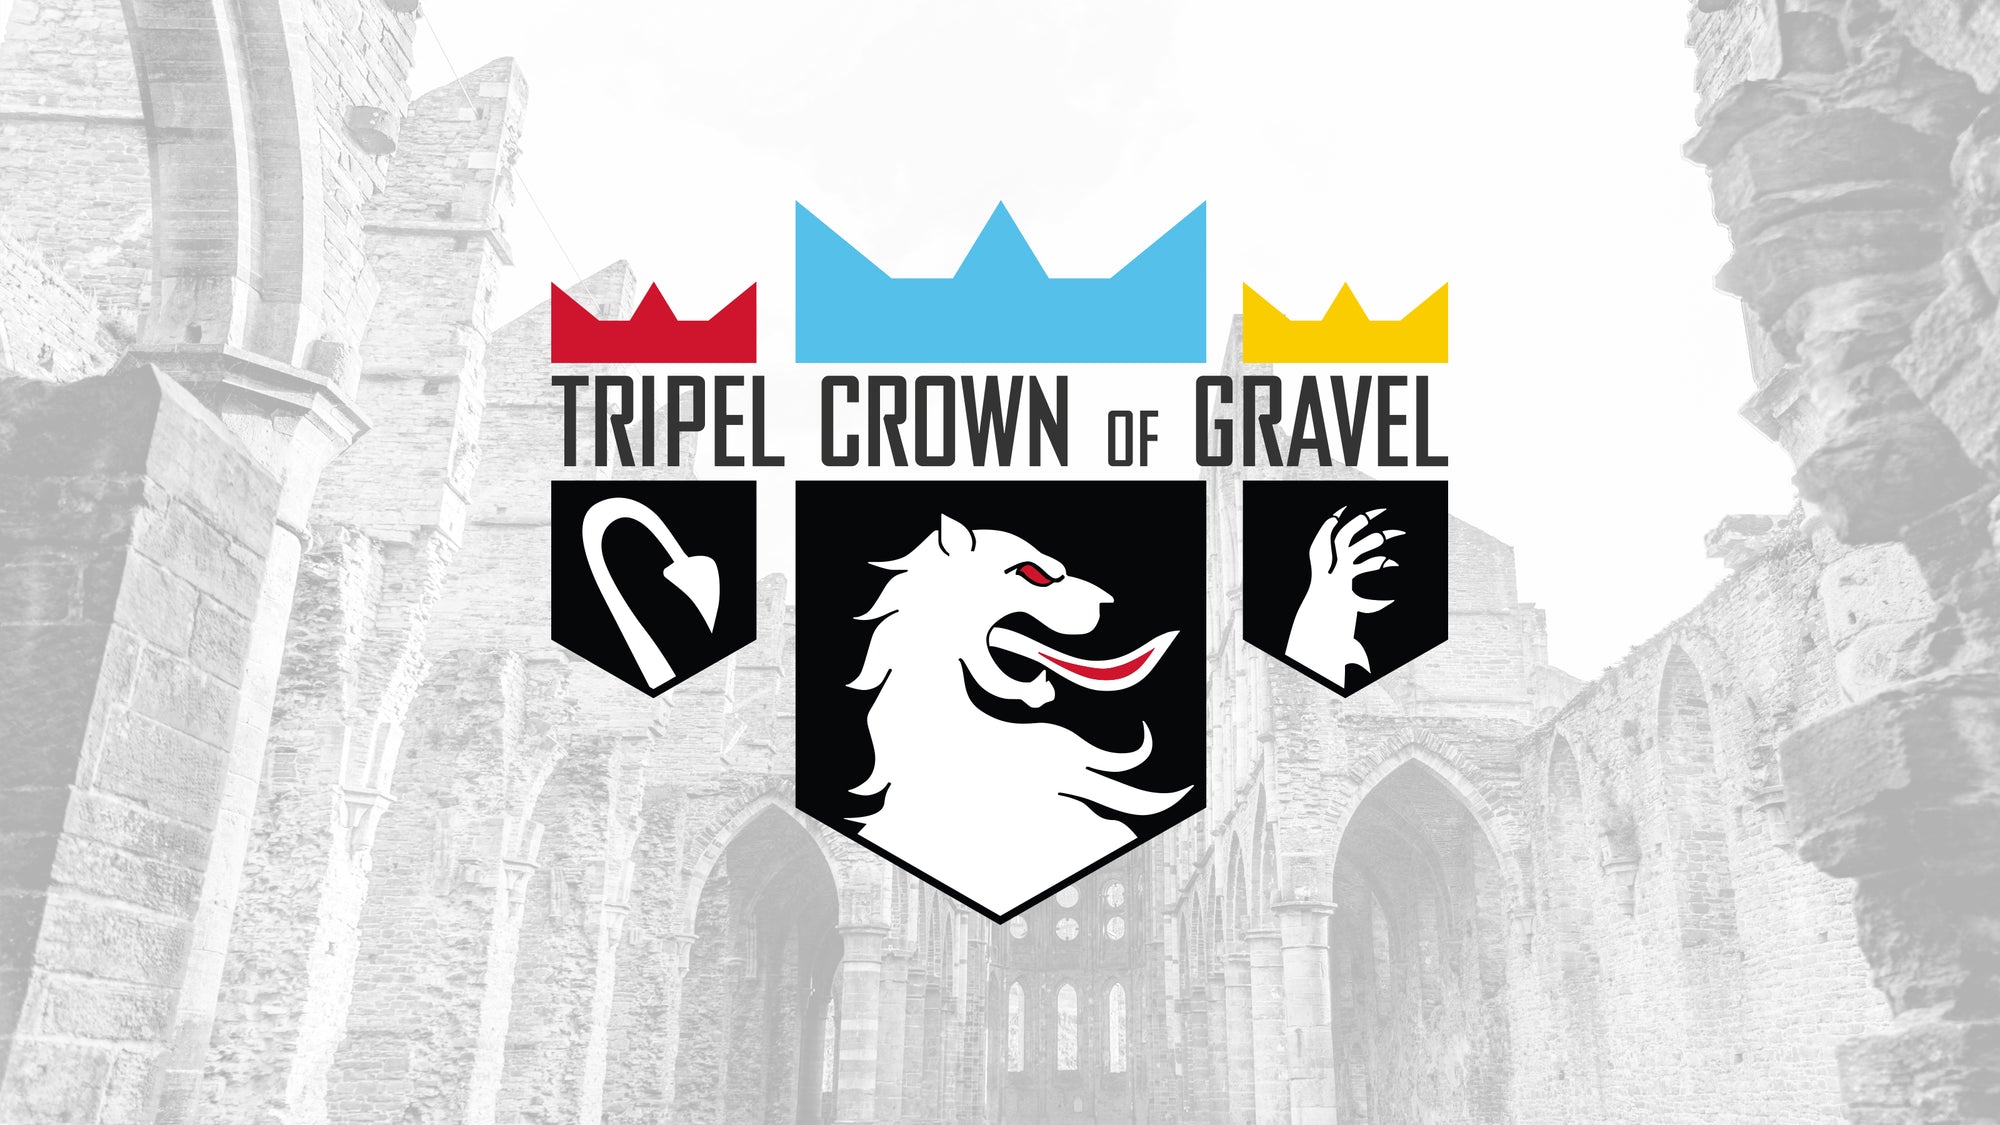 Tripel Crown of Gravel logo